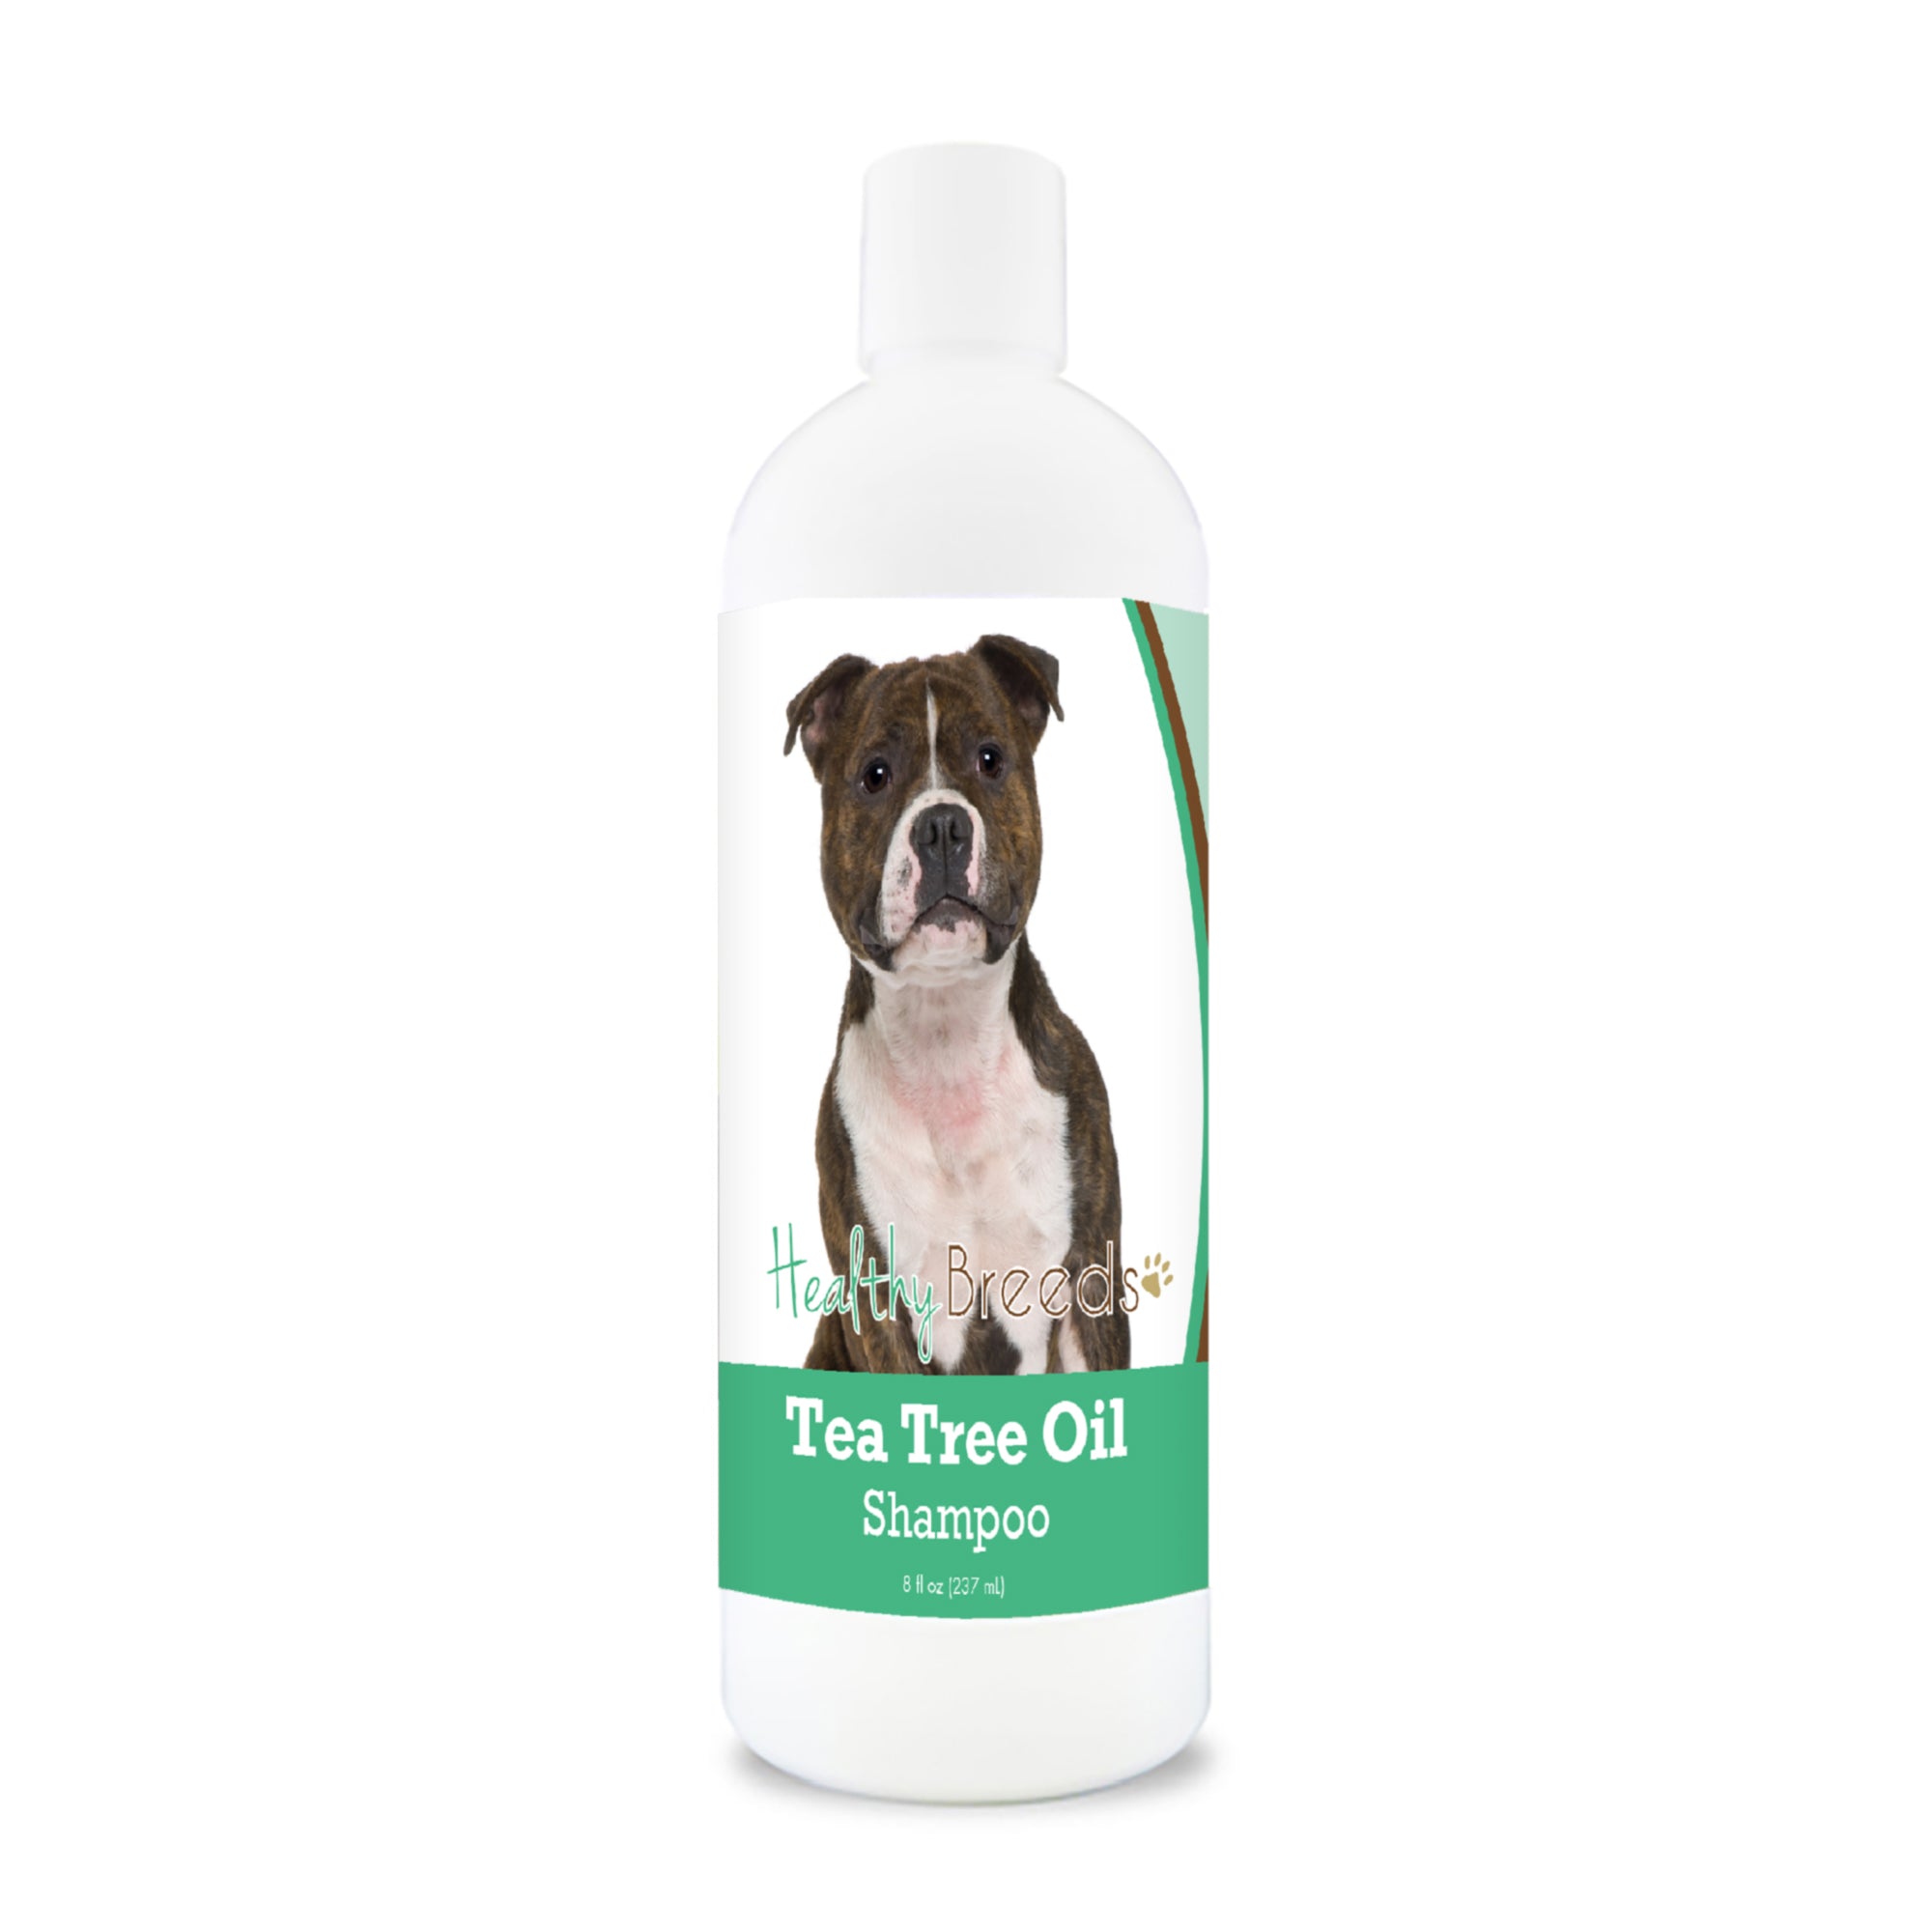 Staffordshire Bull Terrier Tea Tree Oil Shampoo 8 oz